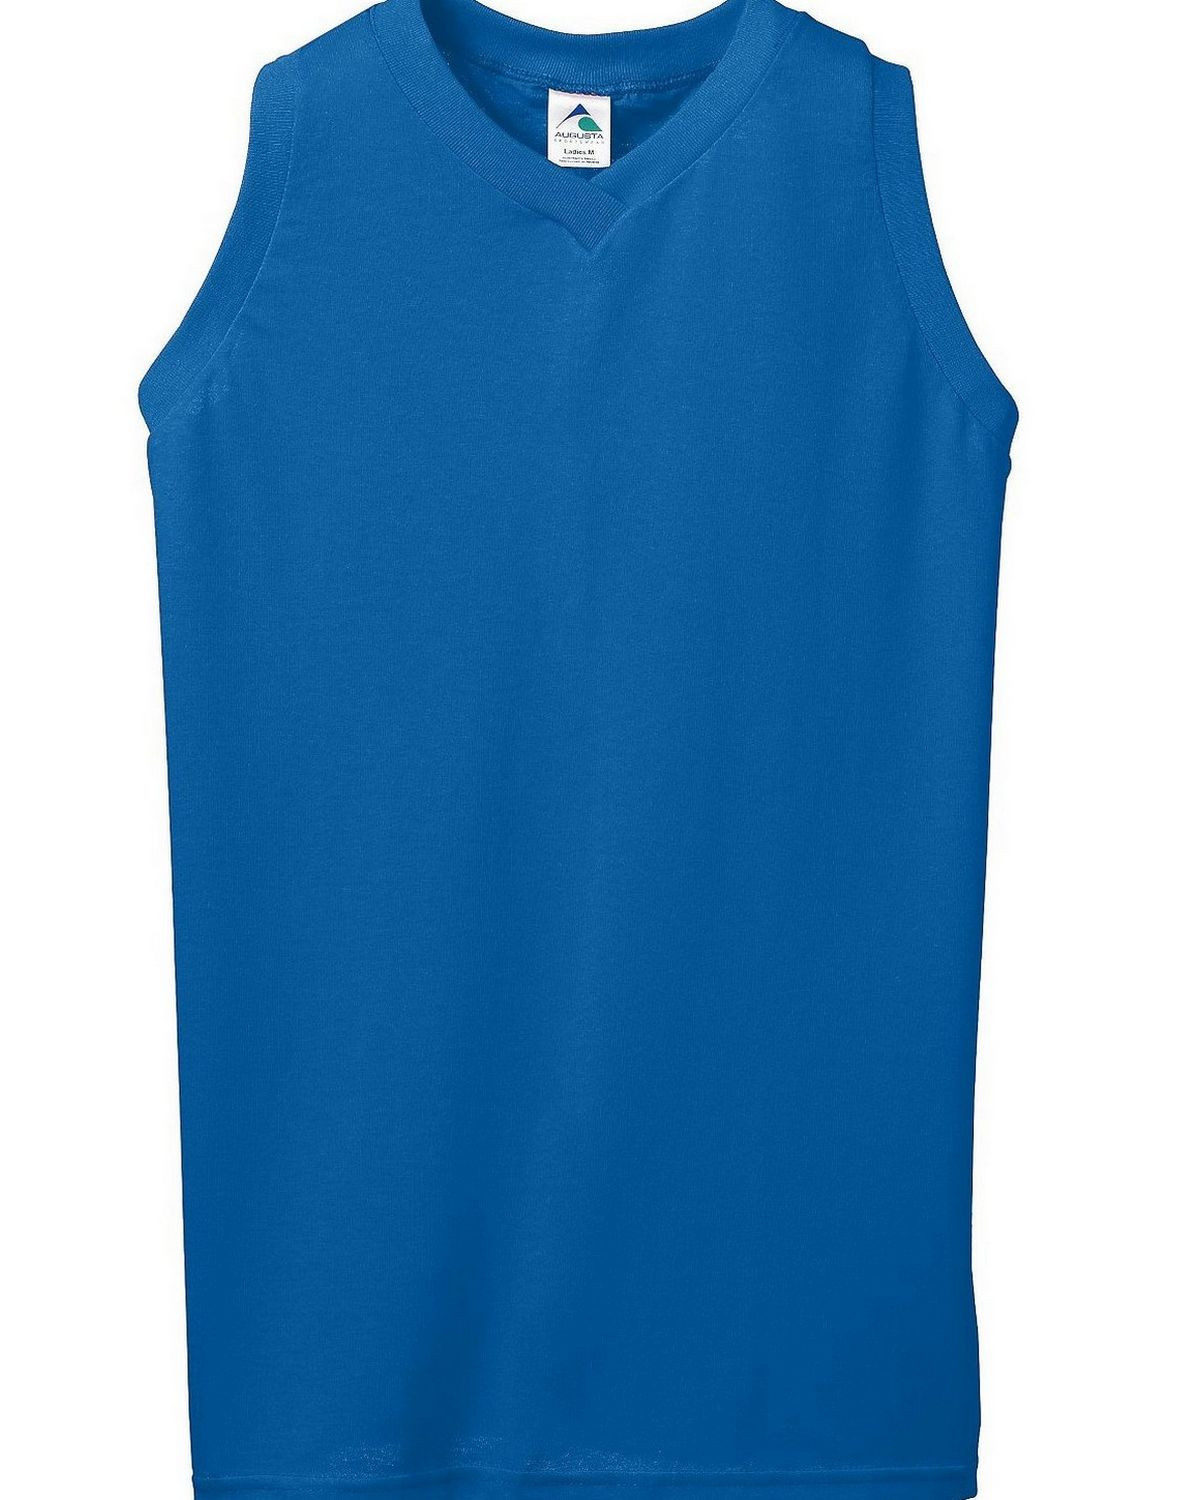 Augusta Sportswear 556 Women's Sleeveless V Neck Shirt - Royal - S #sleeveless